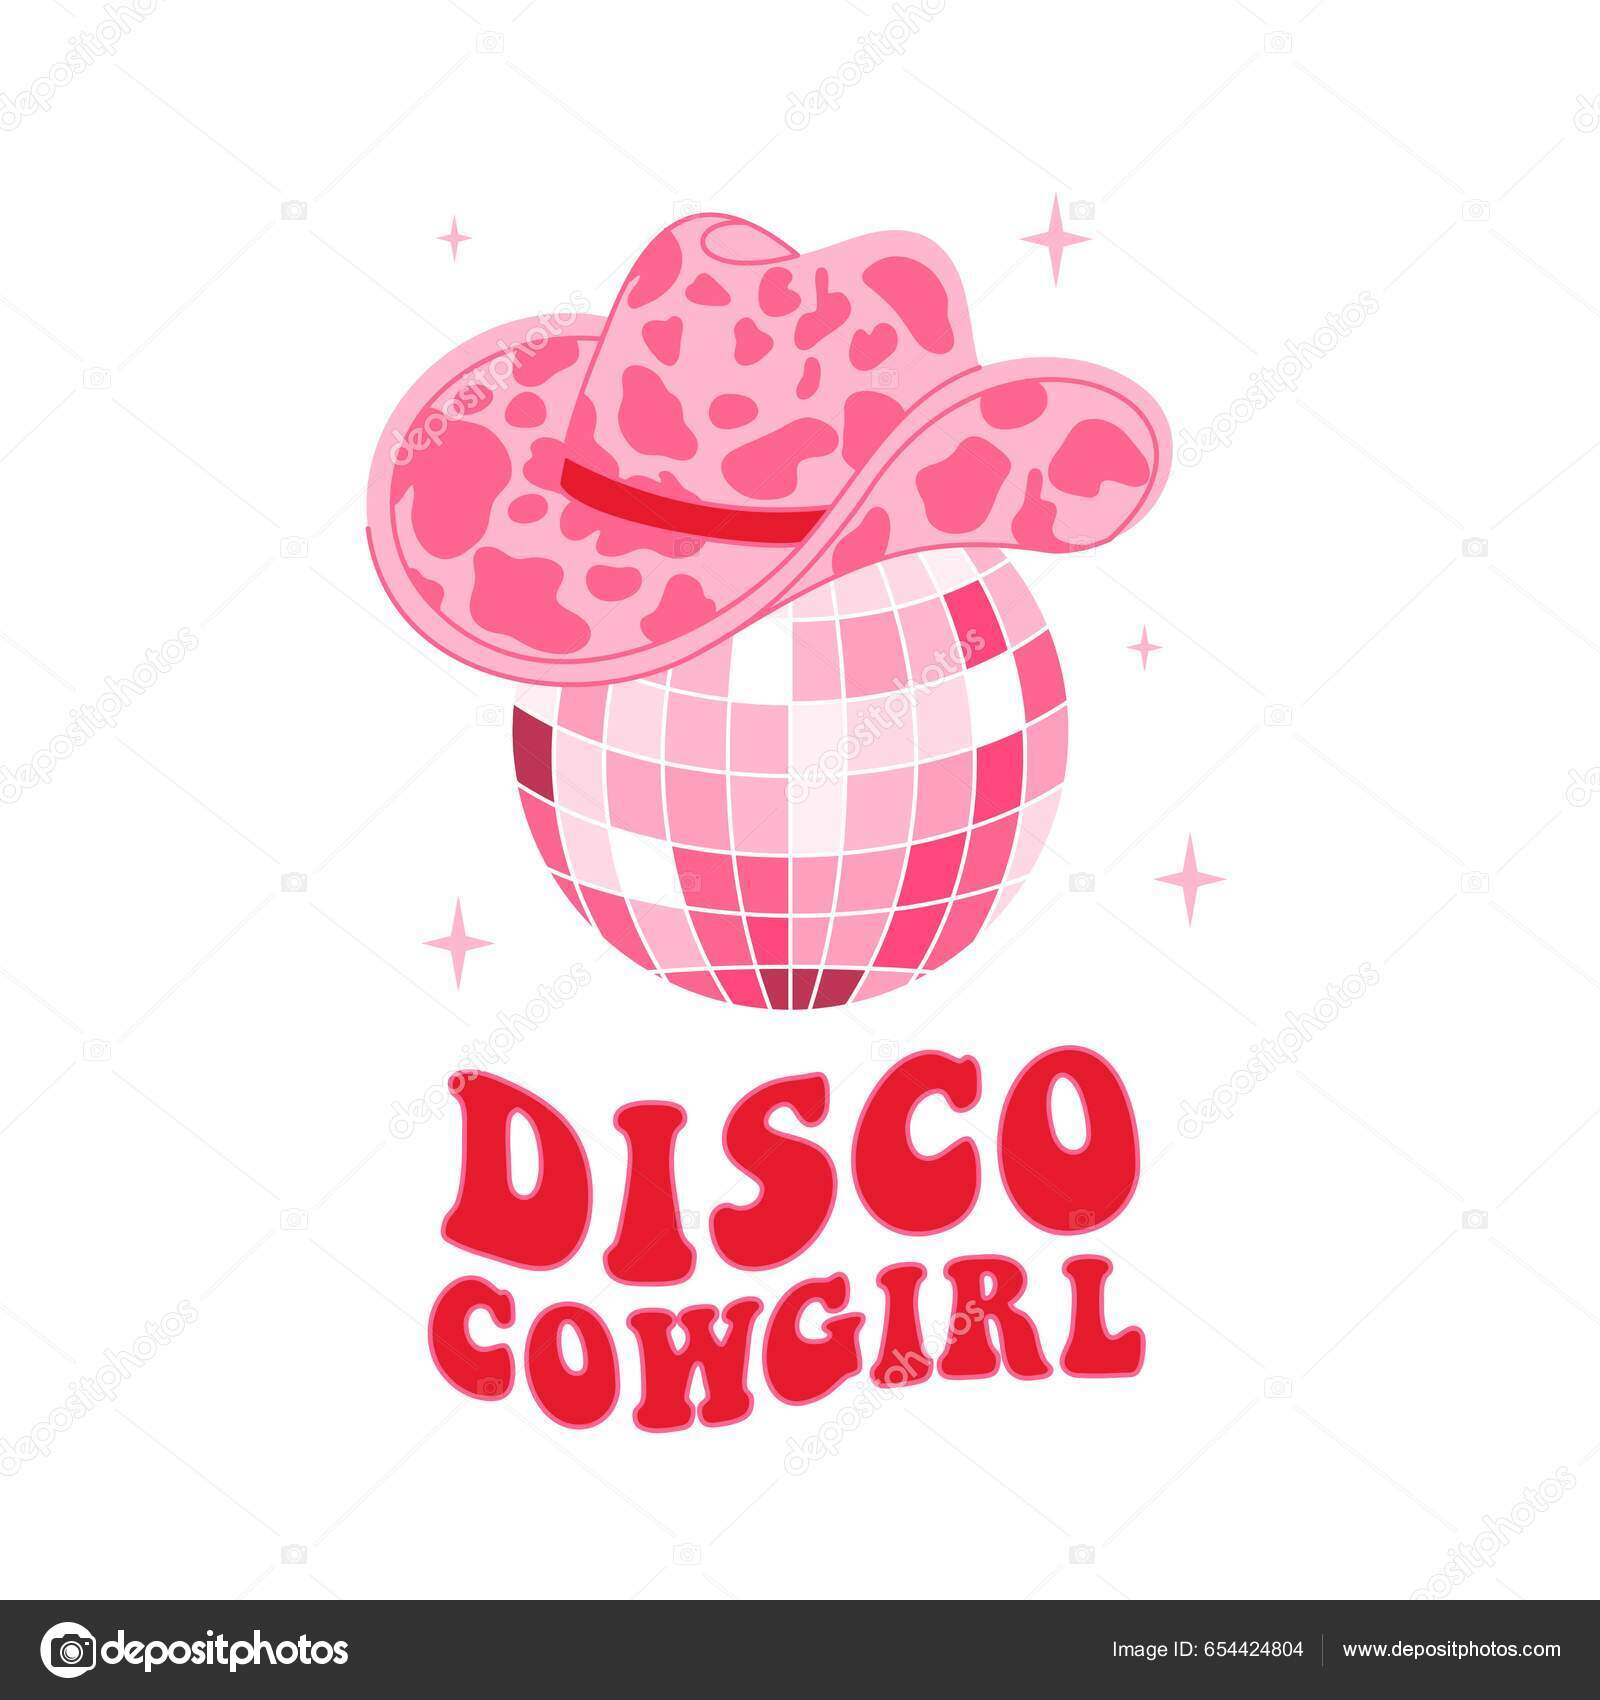 https://st5.depositphotos.com/24720836/65442/v/1600/depositphotos_654424804-stock-illustration-retro-pink-cowgirl-hat-disco.jpg